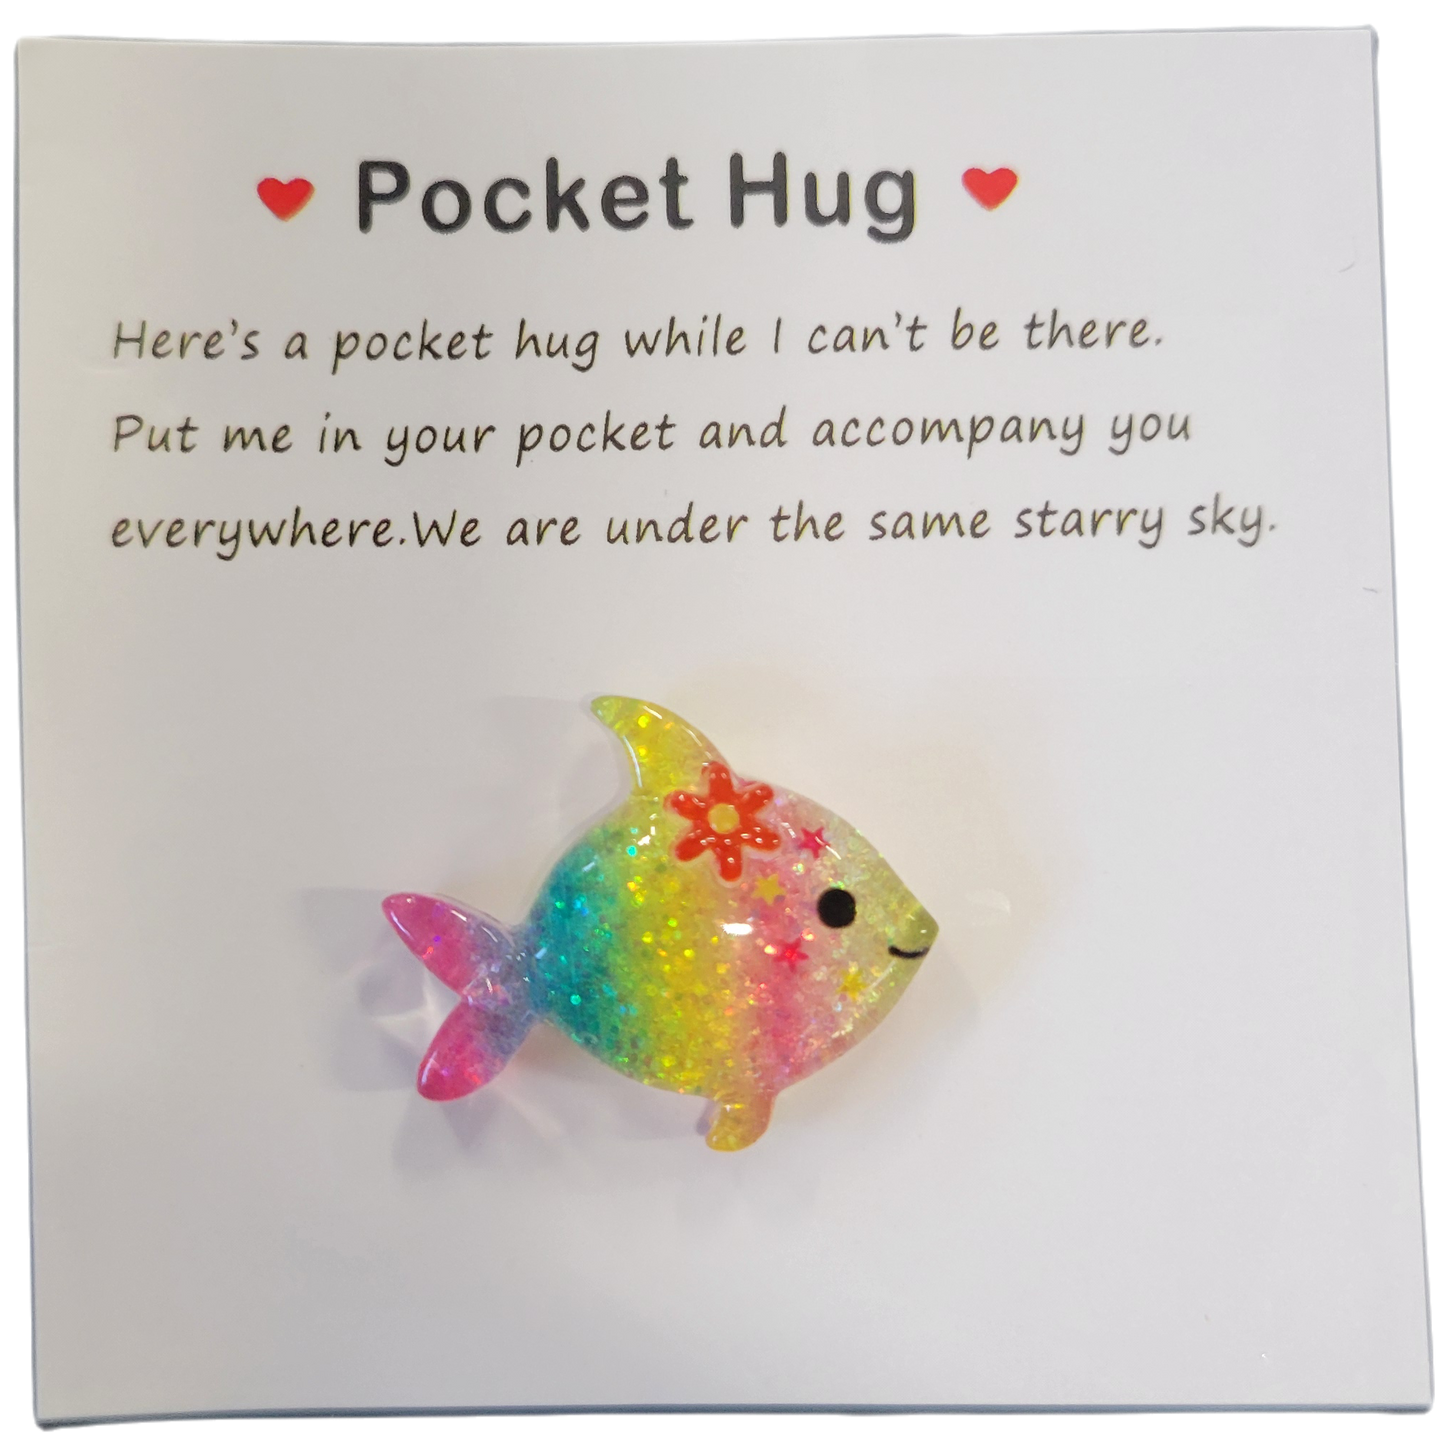 Pocket Pet